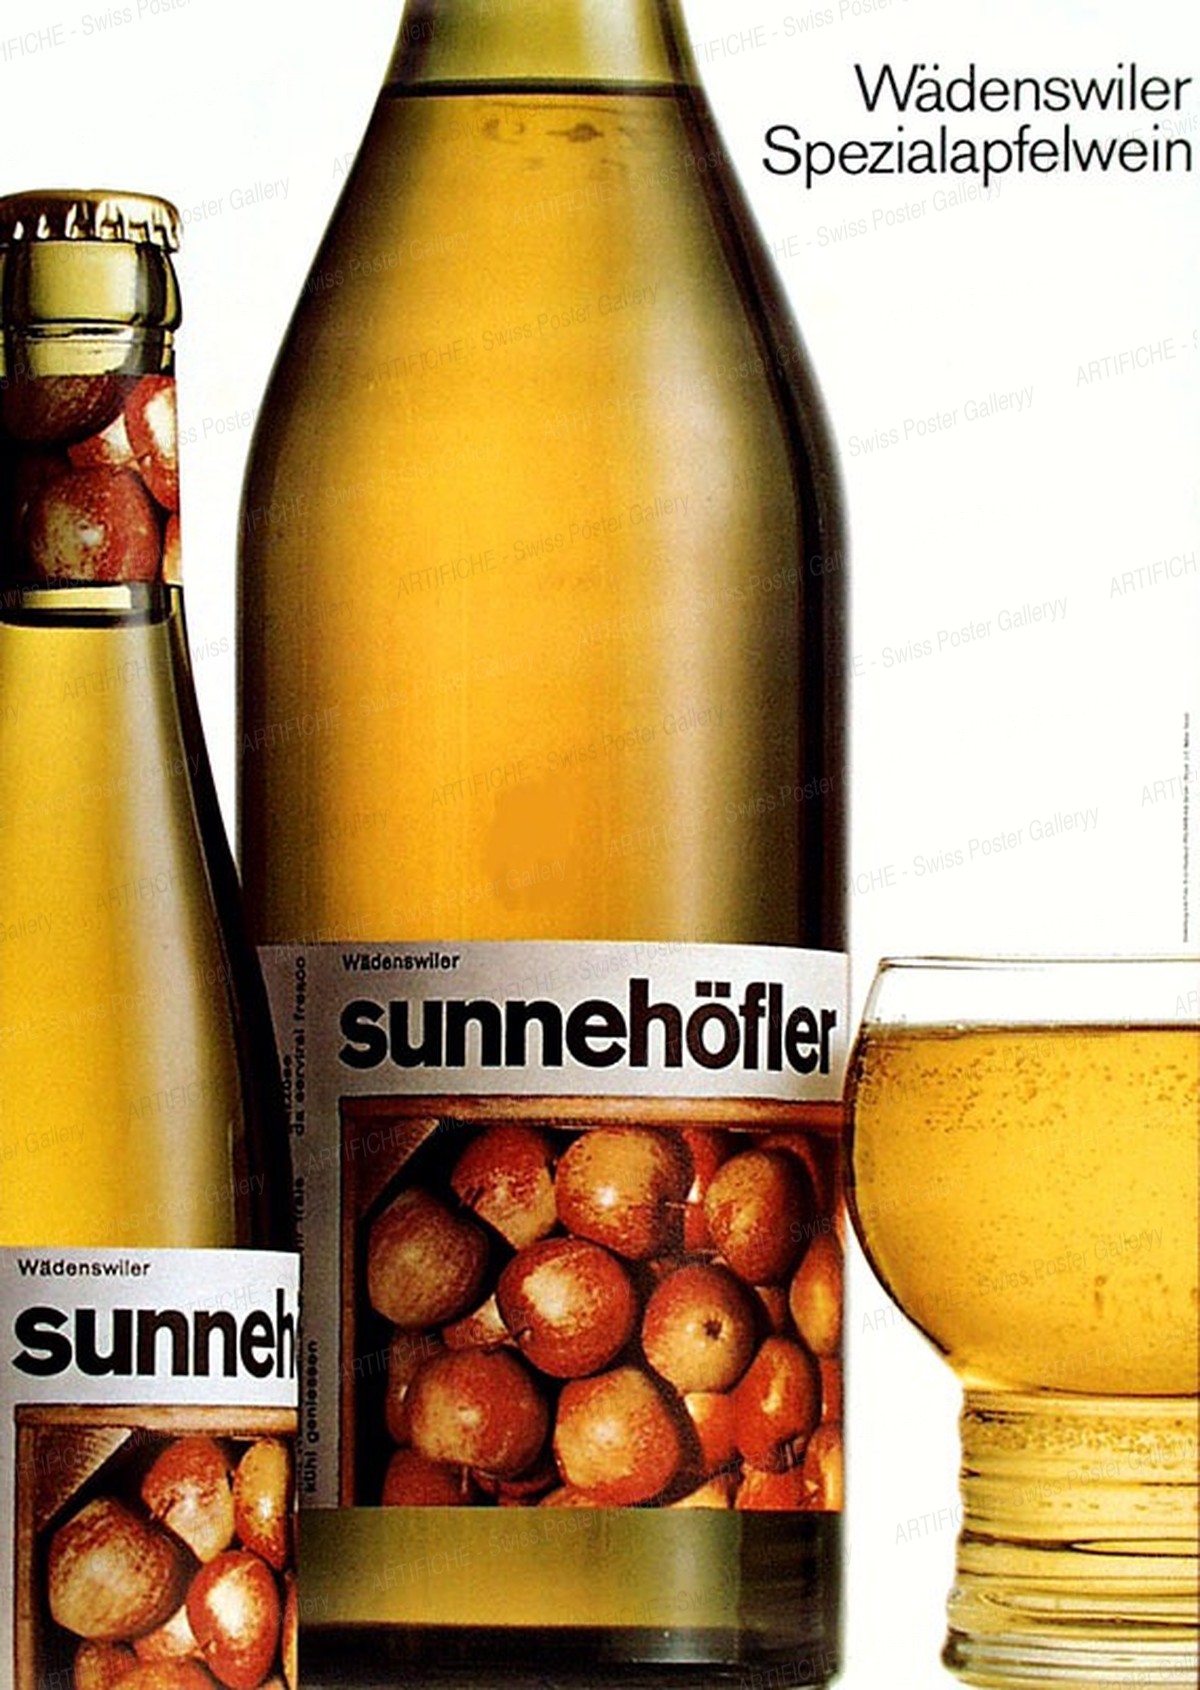 Wädenswil Sunnehöfler Special cider, Hiestand E. & U.